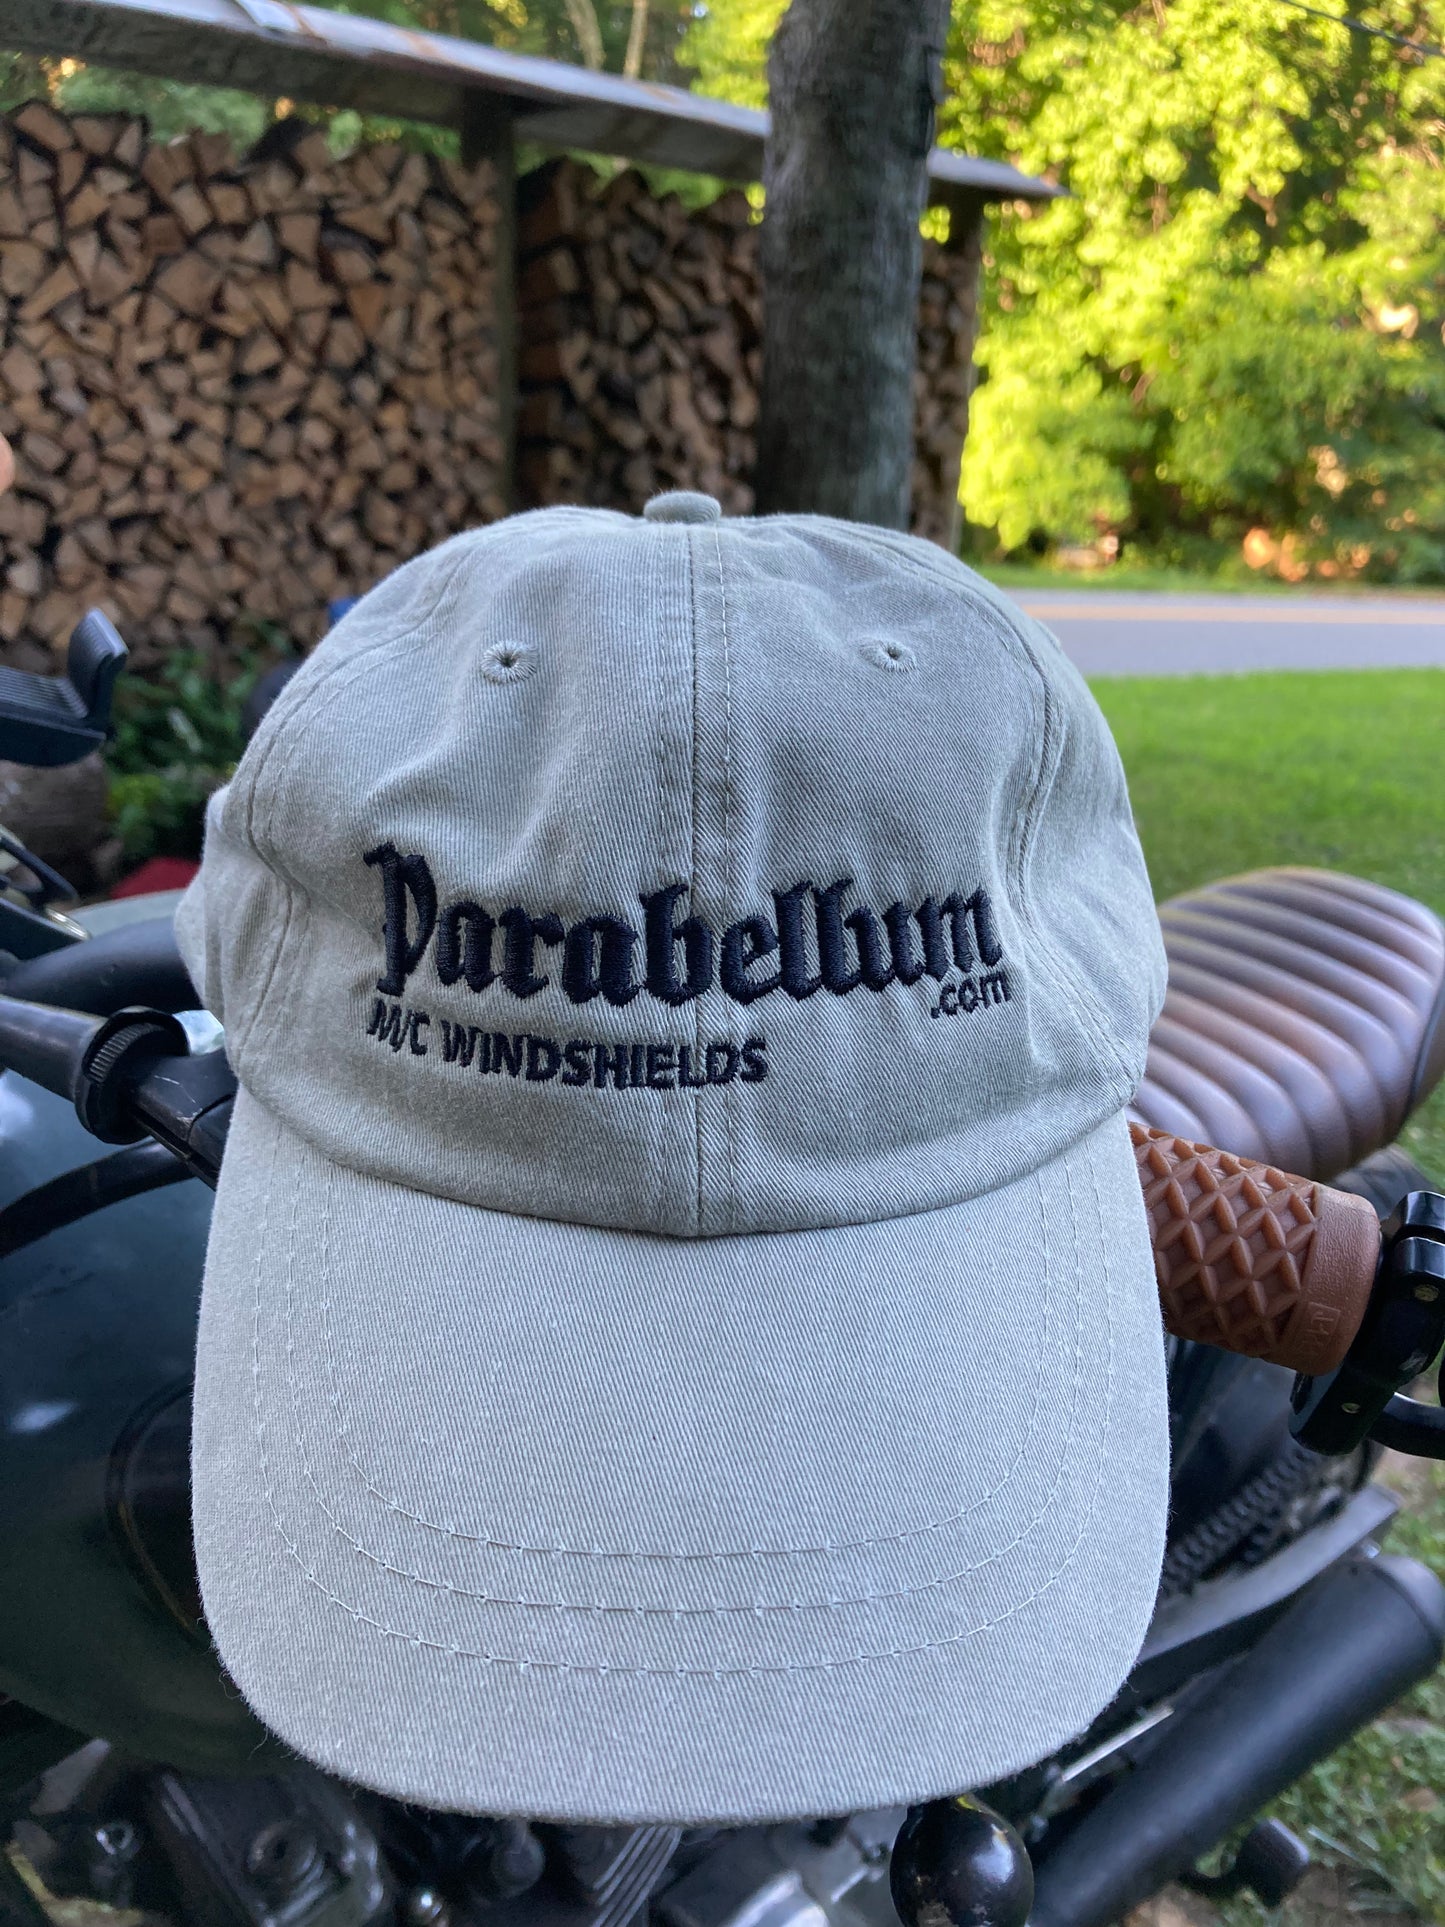 Parabellum Baseball Hat